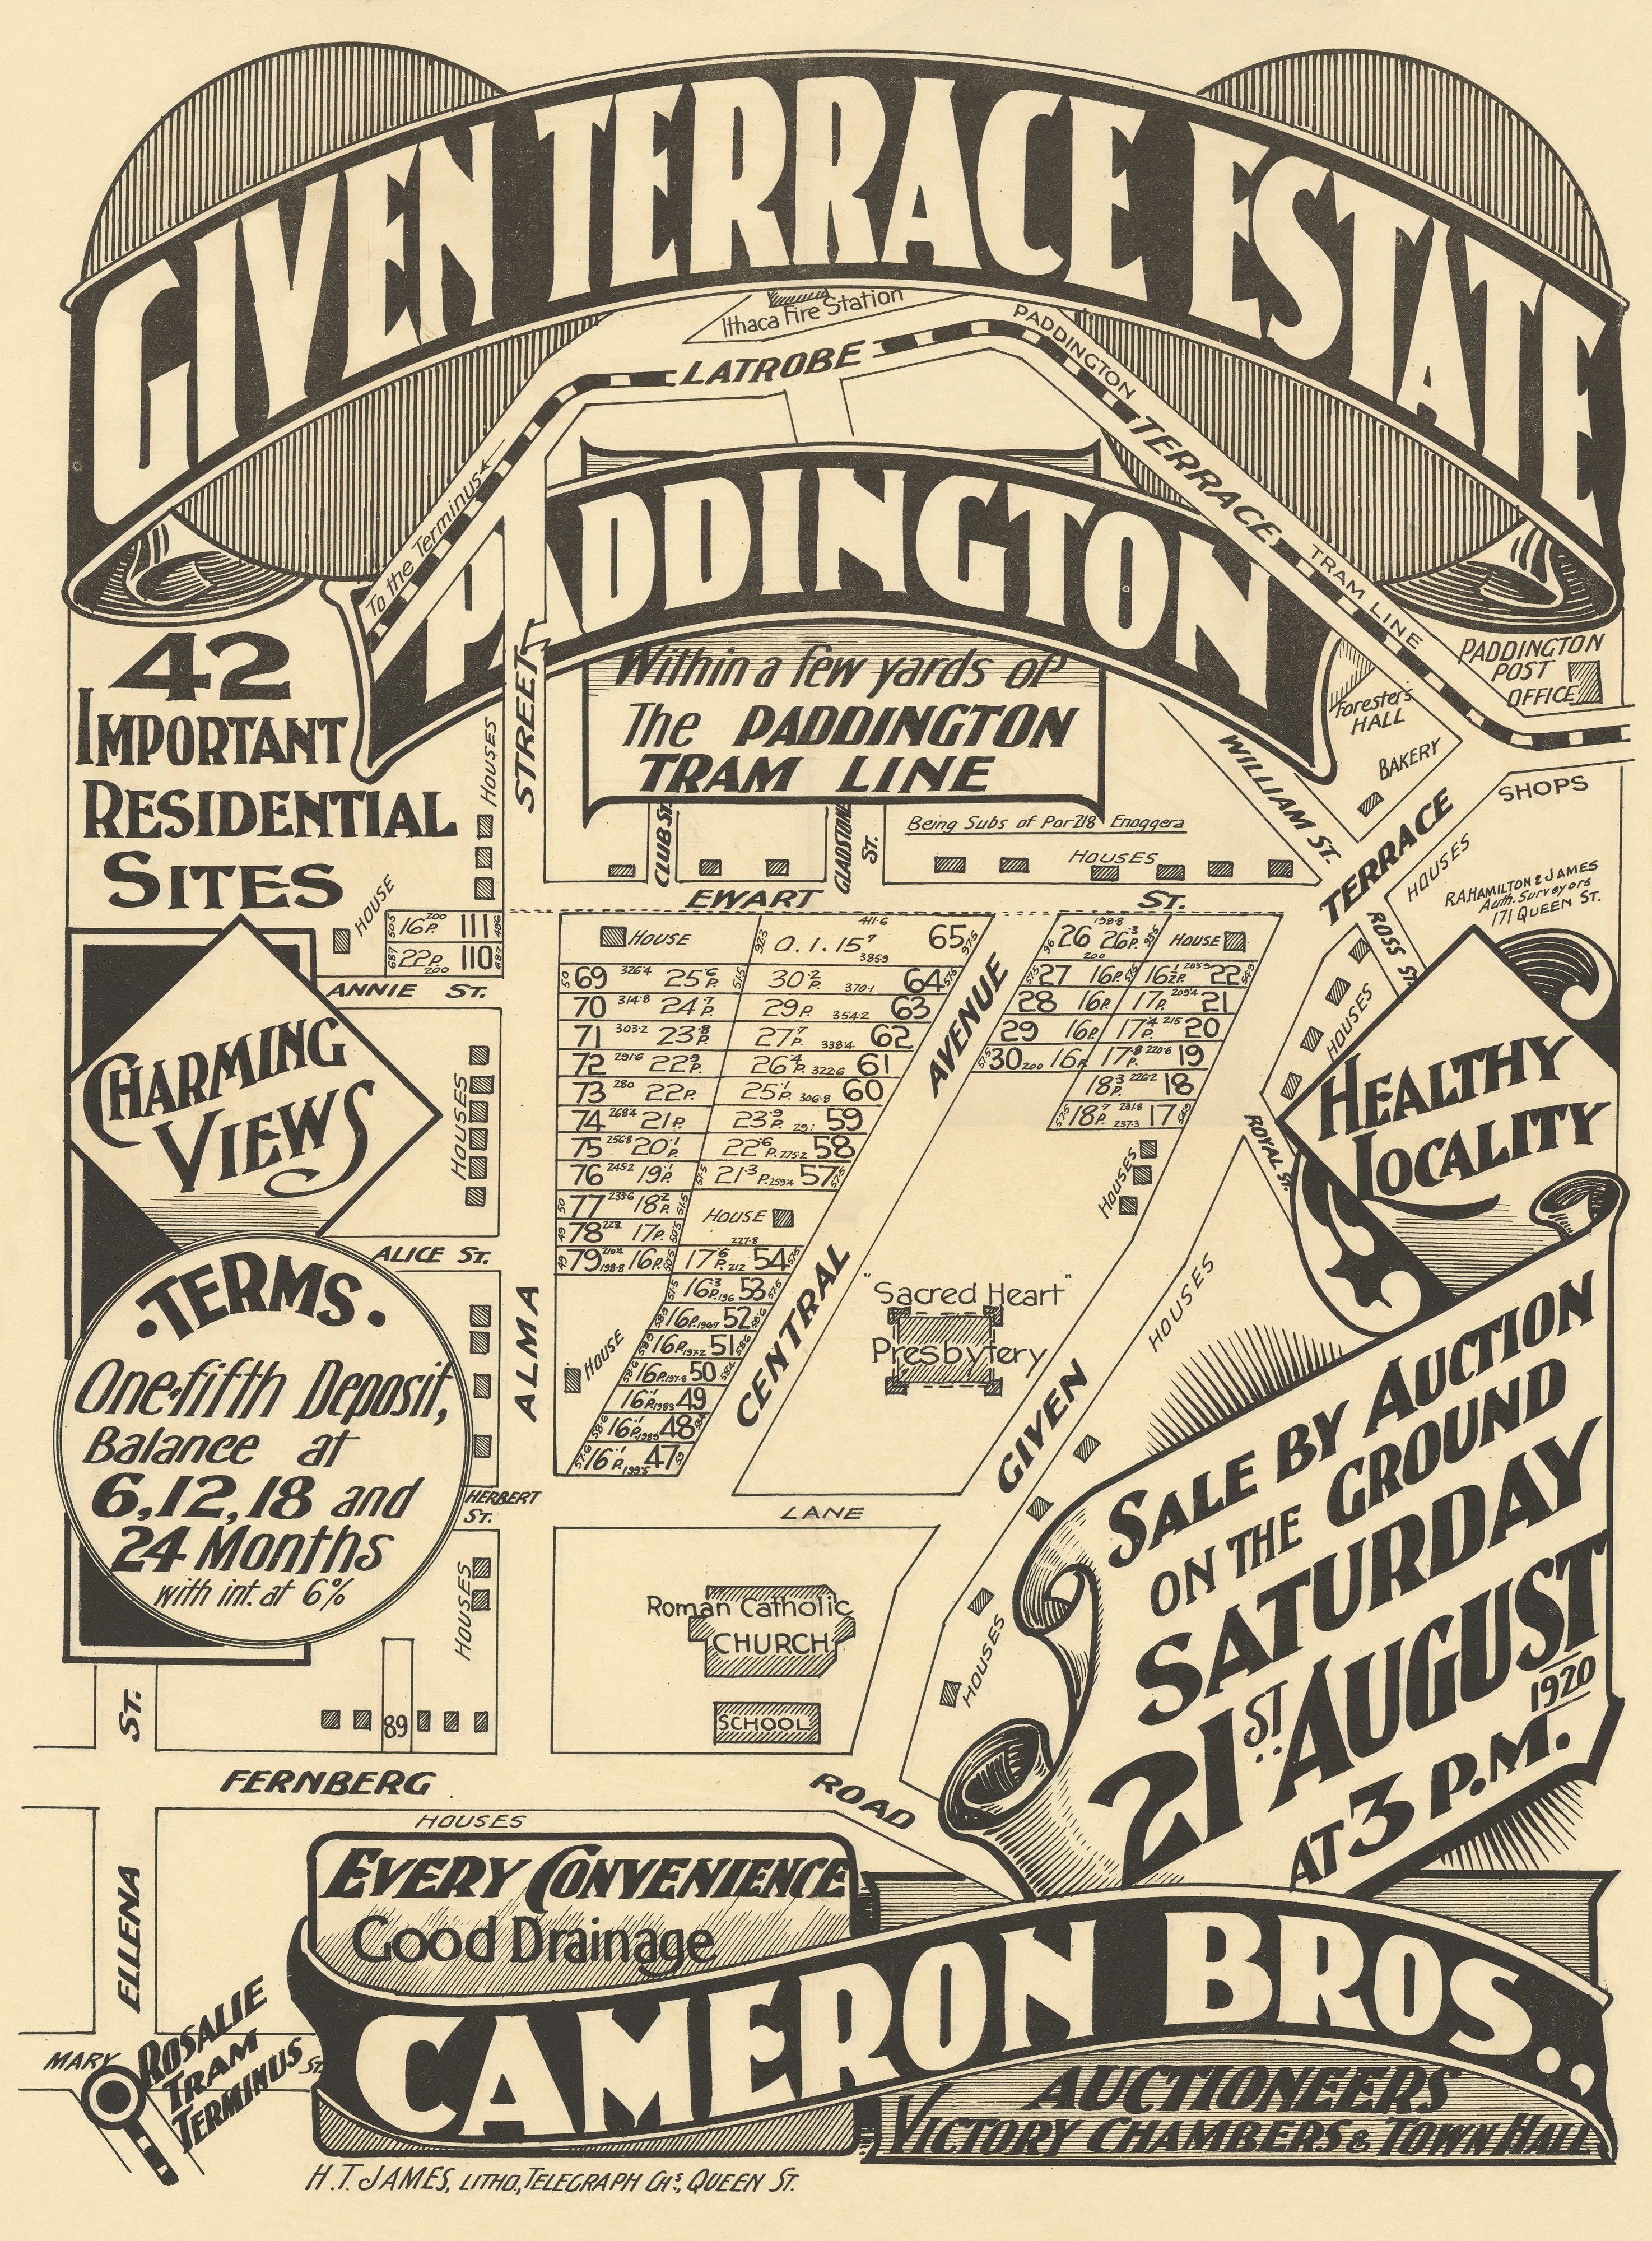 1920 Paddington - Given Terrace Estate